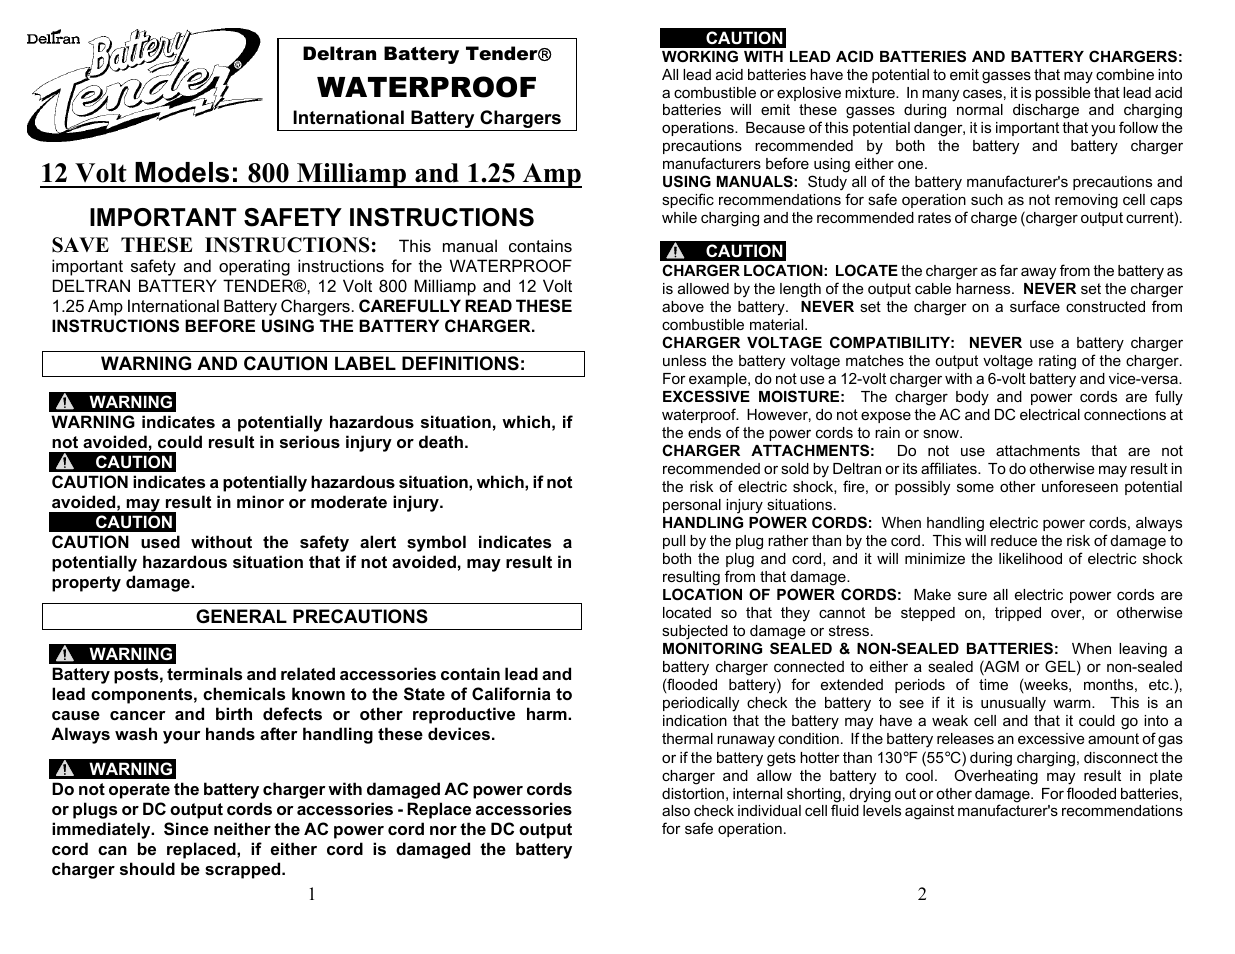 Waterproof 800 International - 12V @ 800 mA (PN 022-0150-DL-WH) User Instructions